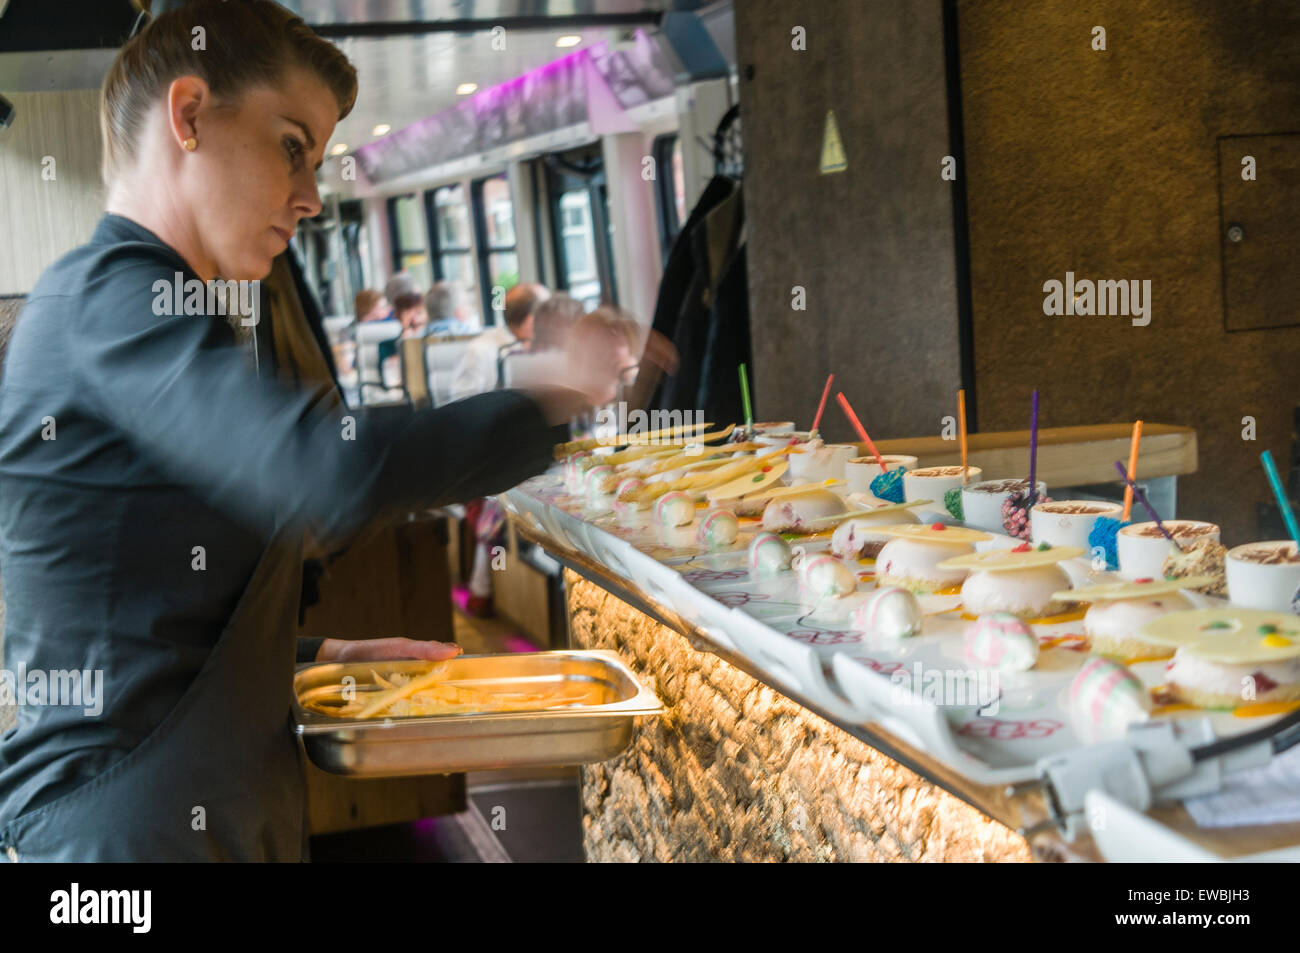 Staff preparare il dessert sul tram Hoftrammm ristorante, Den Haag, Paesi Bassi. Foto Stock